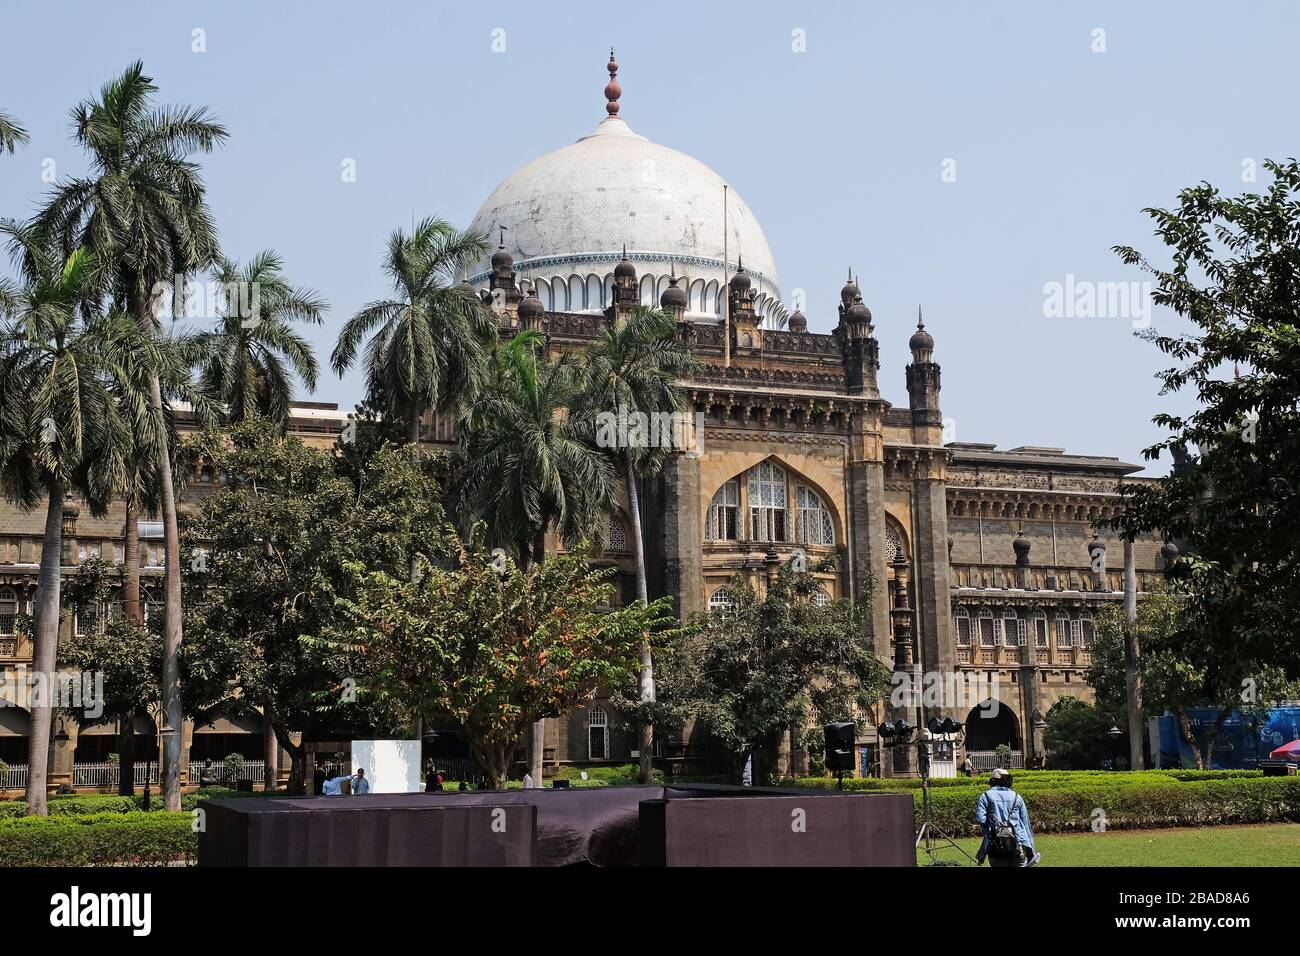 The Chhatrapati Shivaji Maharaj Vastu Sangrahalaya formerly Prince of Wales Museum in Mumbai, India Stock Photo